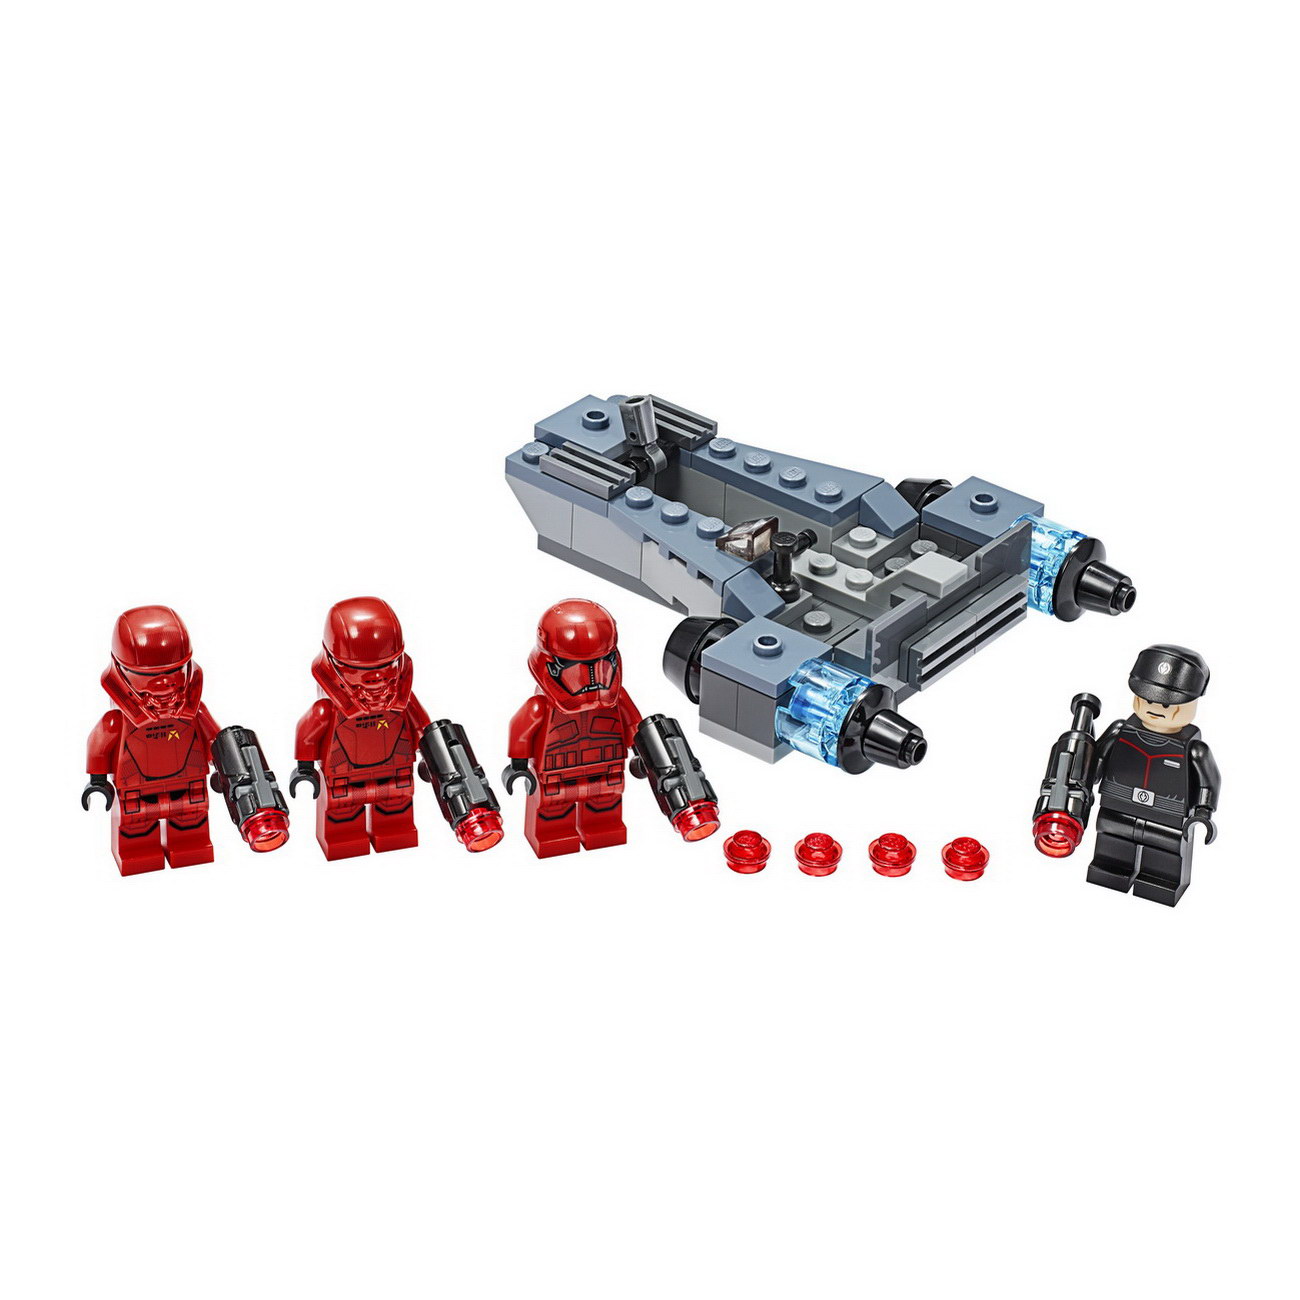 LEGO Star Wars - Sith Trooper Battle Pack (75266)